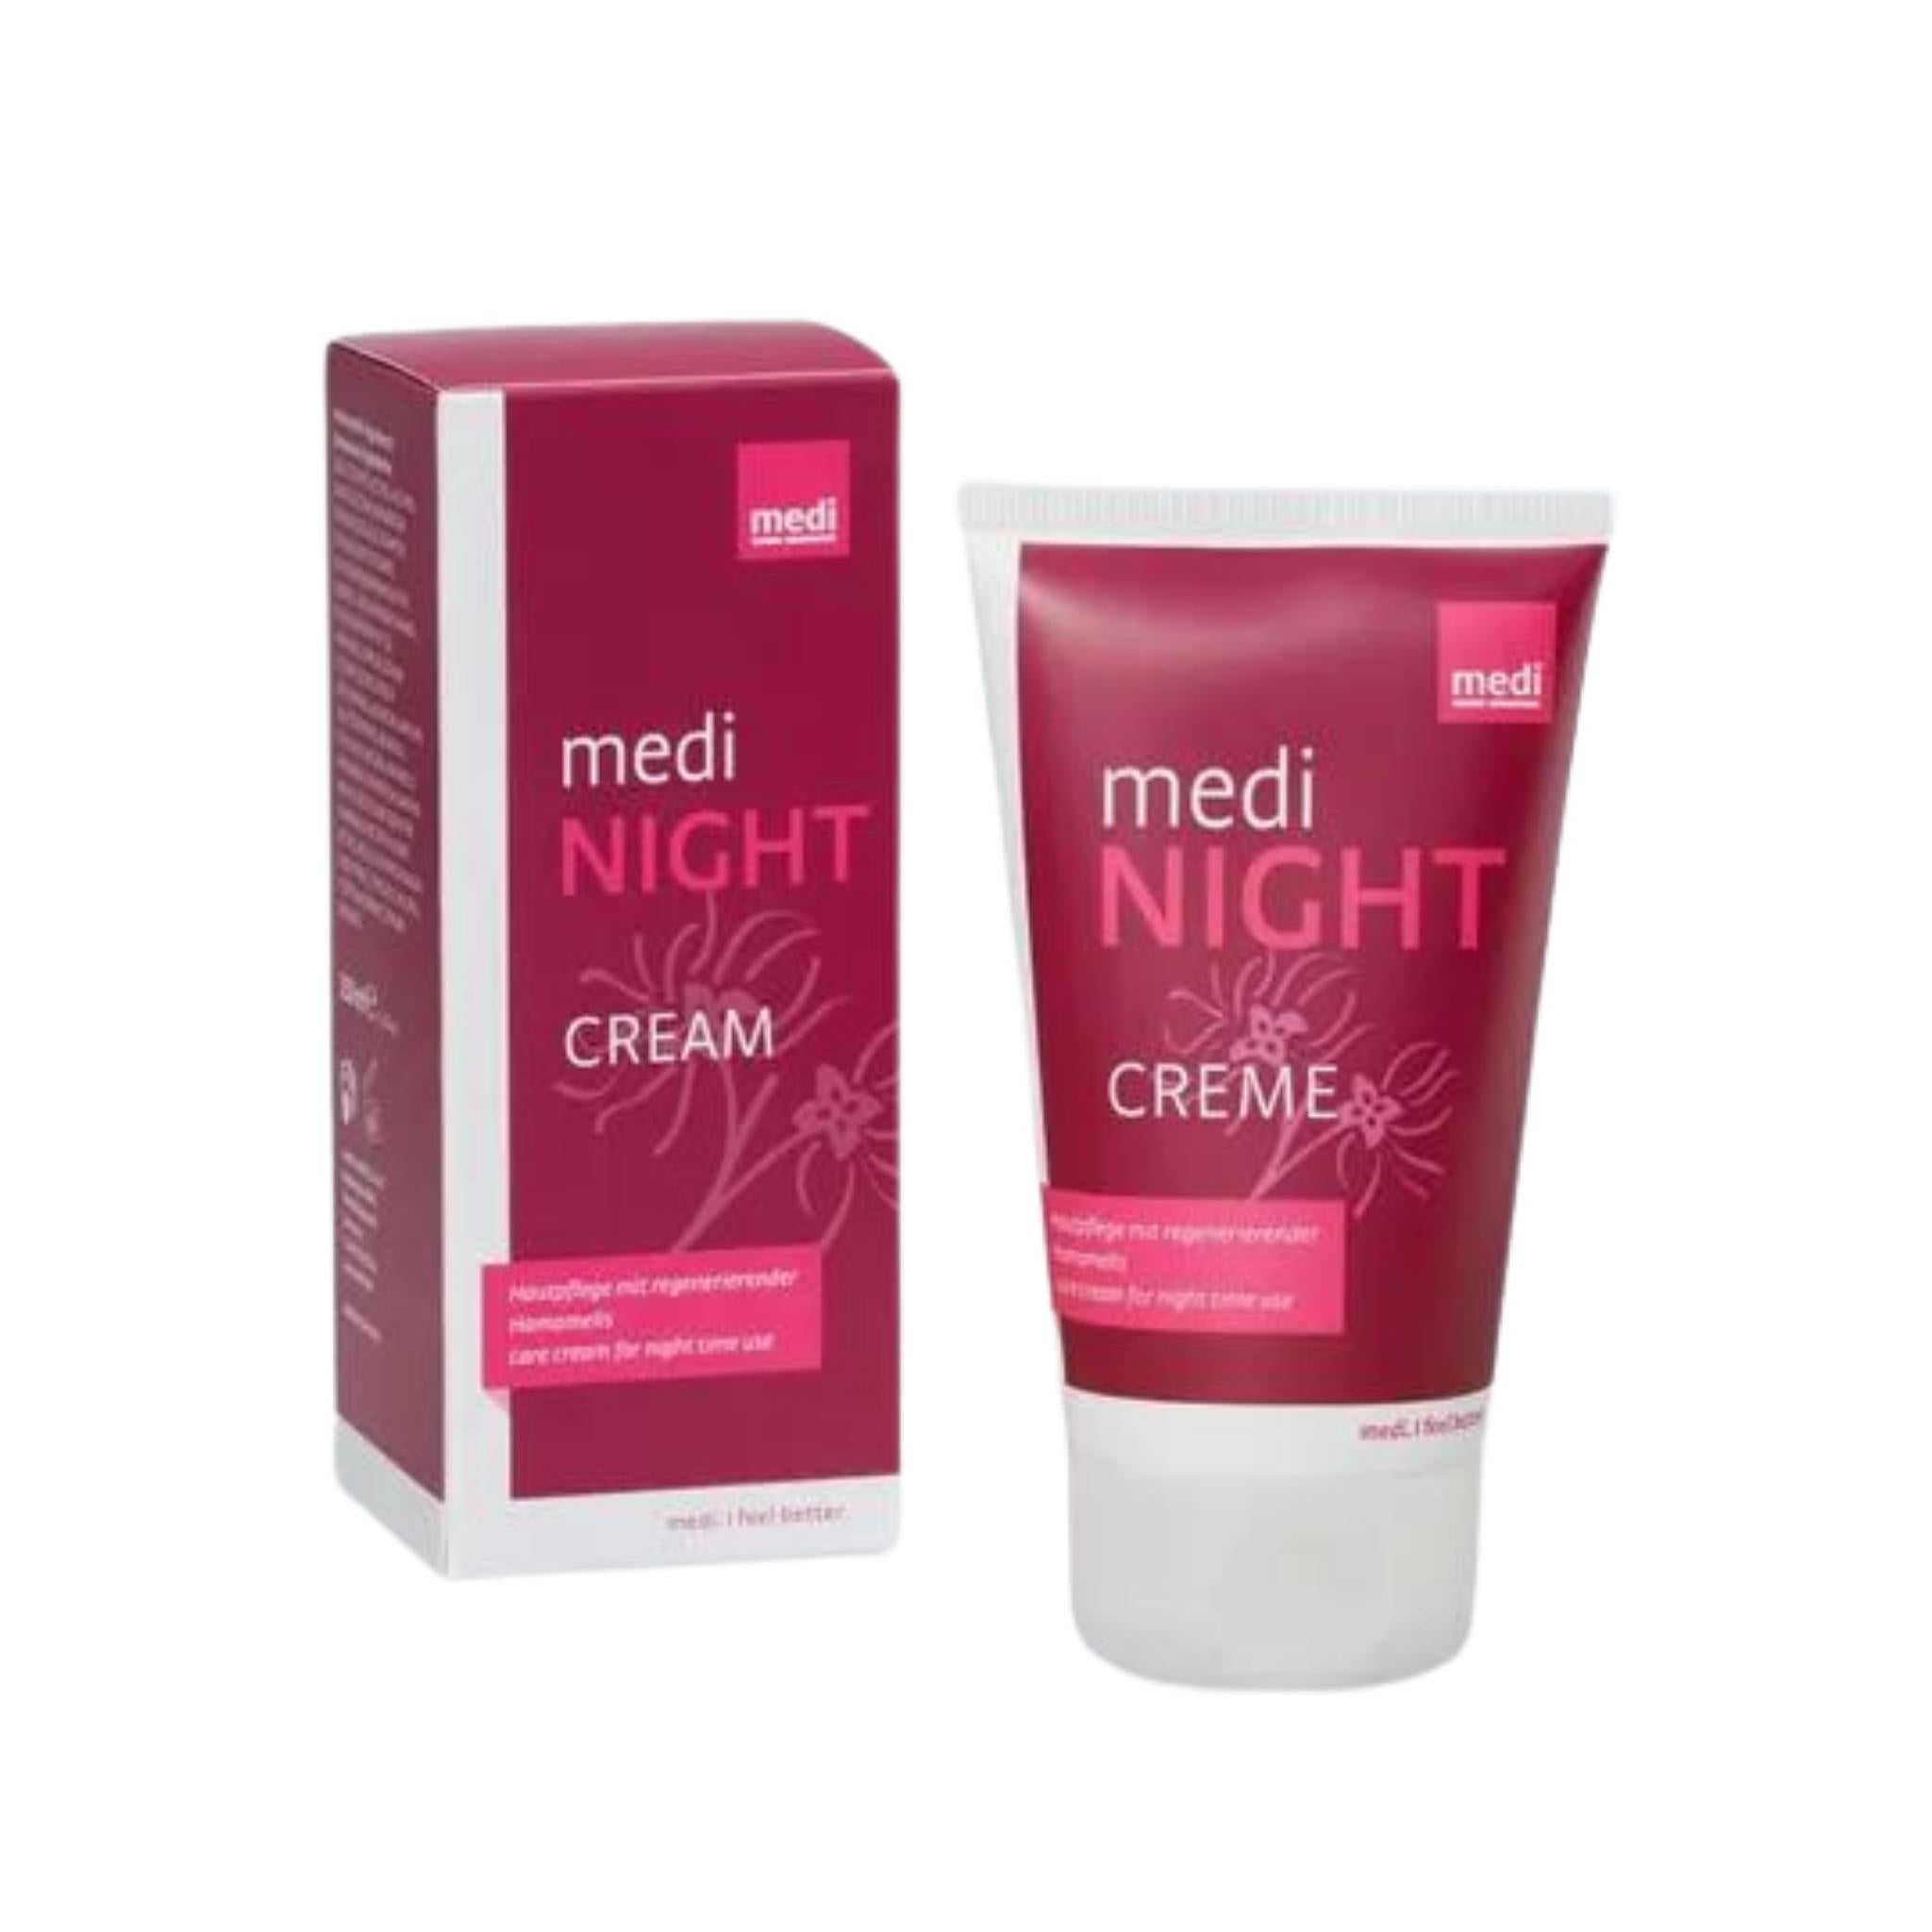 medi Night Cream 50ml